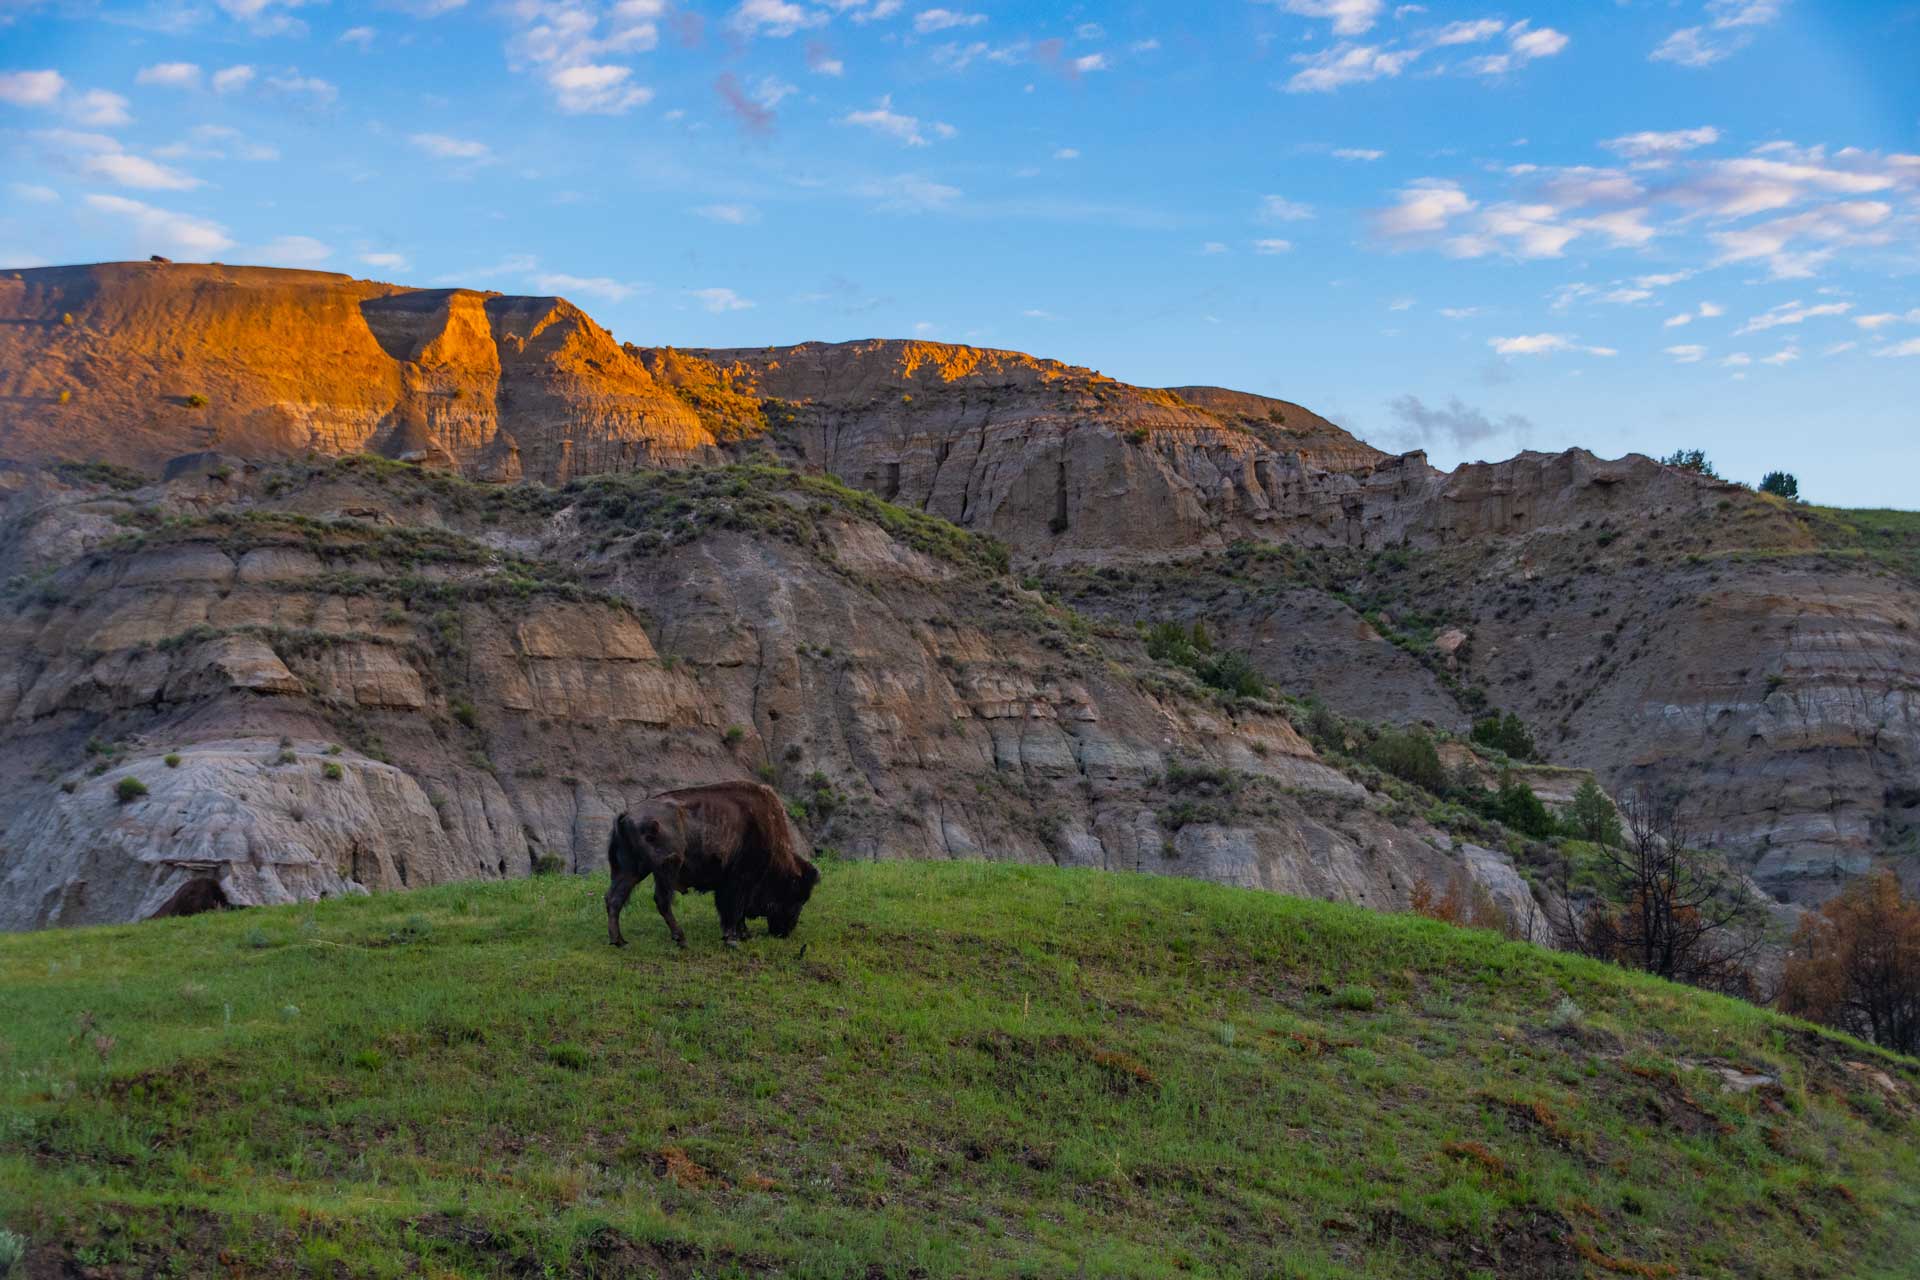 North Dakota mountains with buffalo